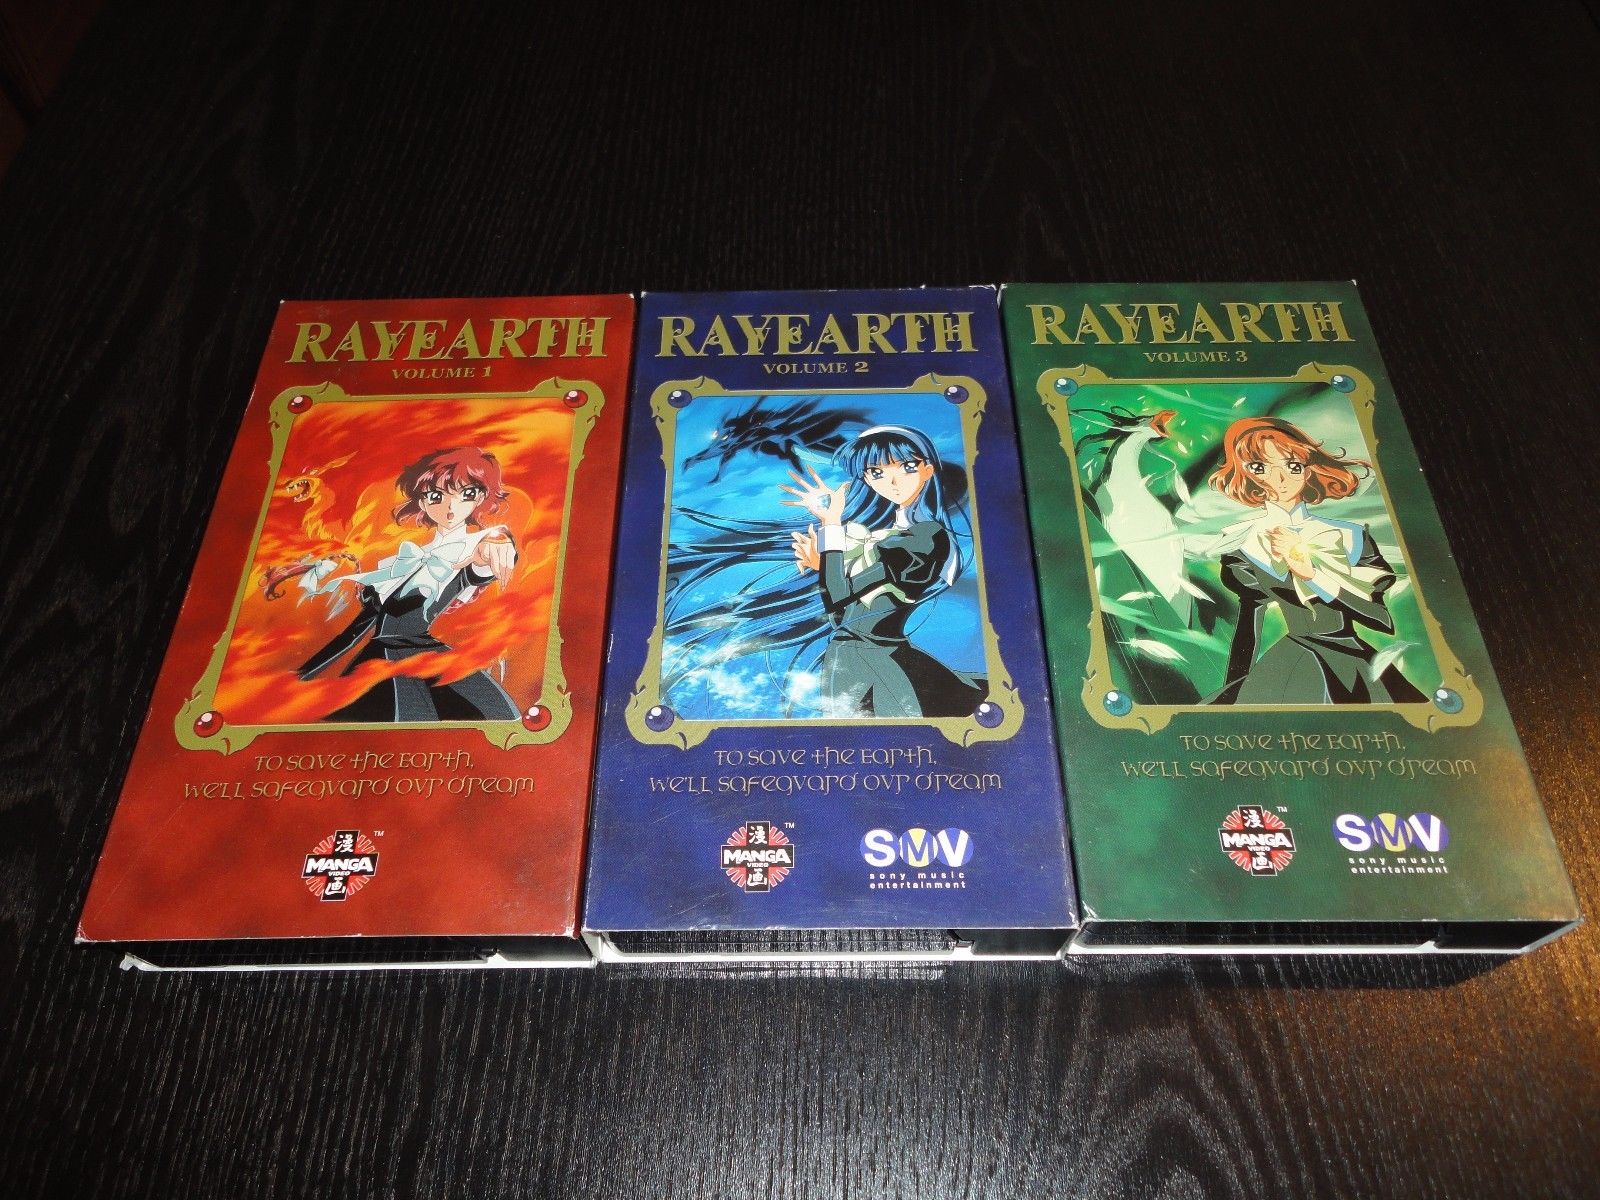 DVD - Magic Knight Rayearth 2: Sleep - Anime Works - USA